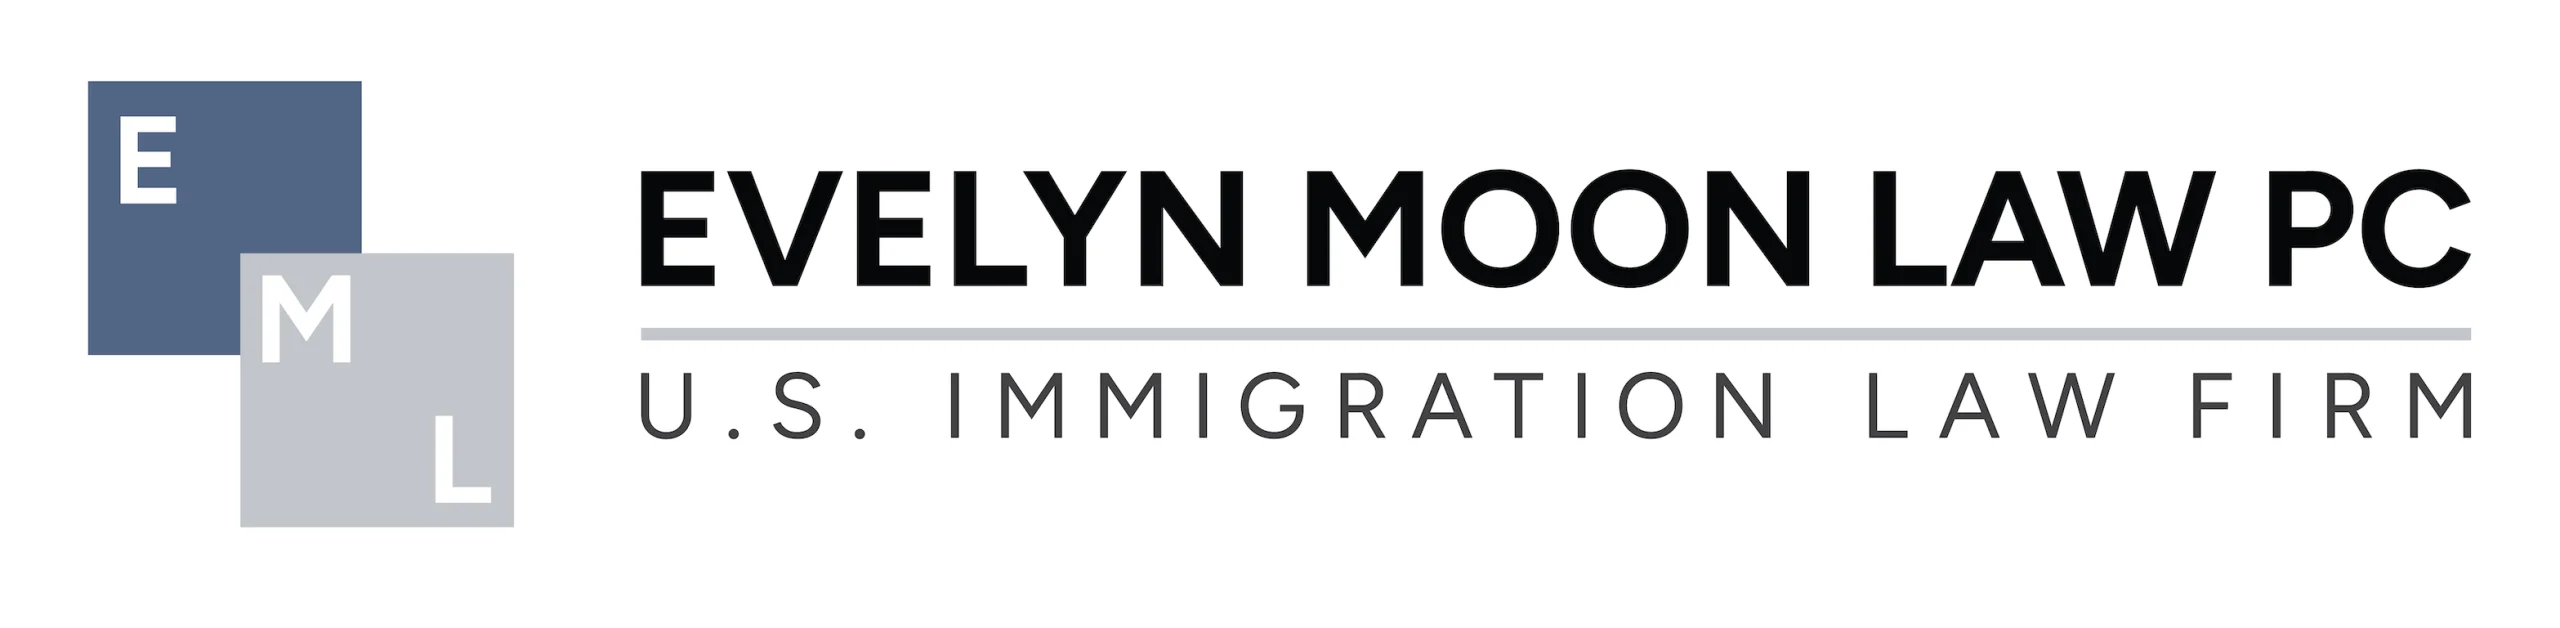 Evelyn Moon Law PC logo